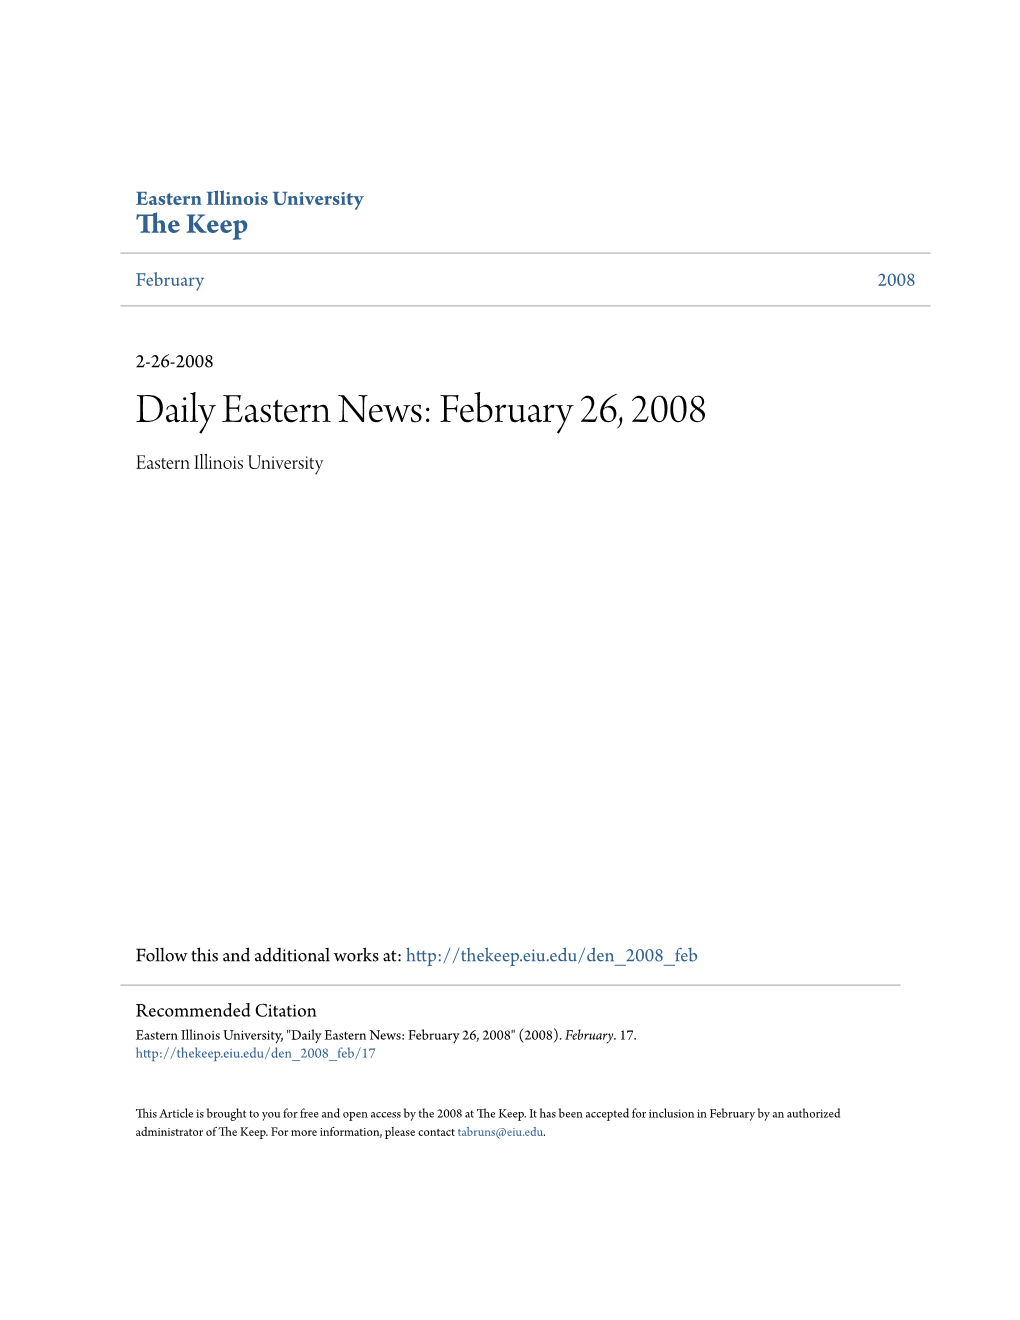 Daily Eastern News: February 26, 2008 Eastern Illinois University